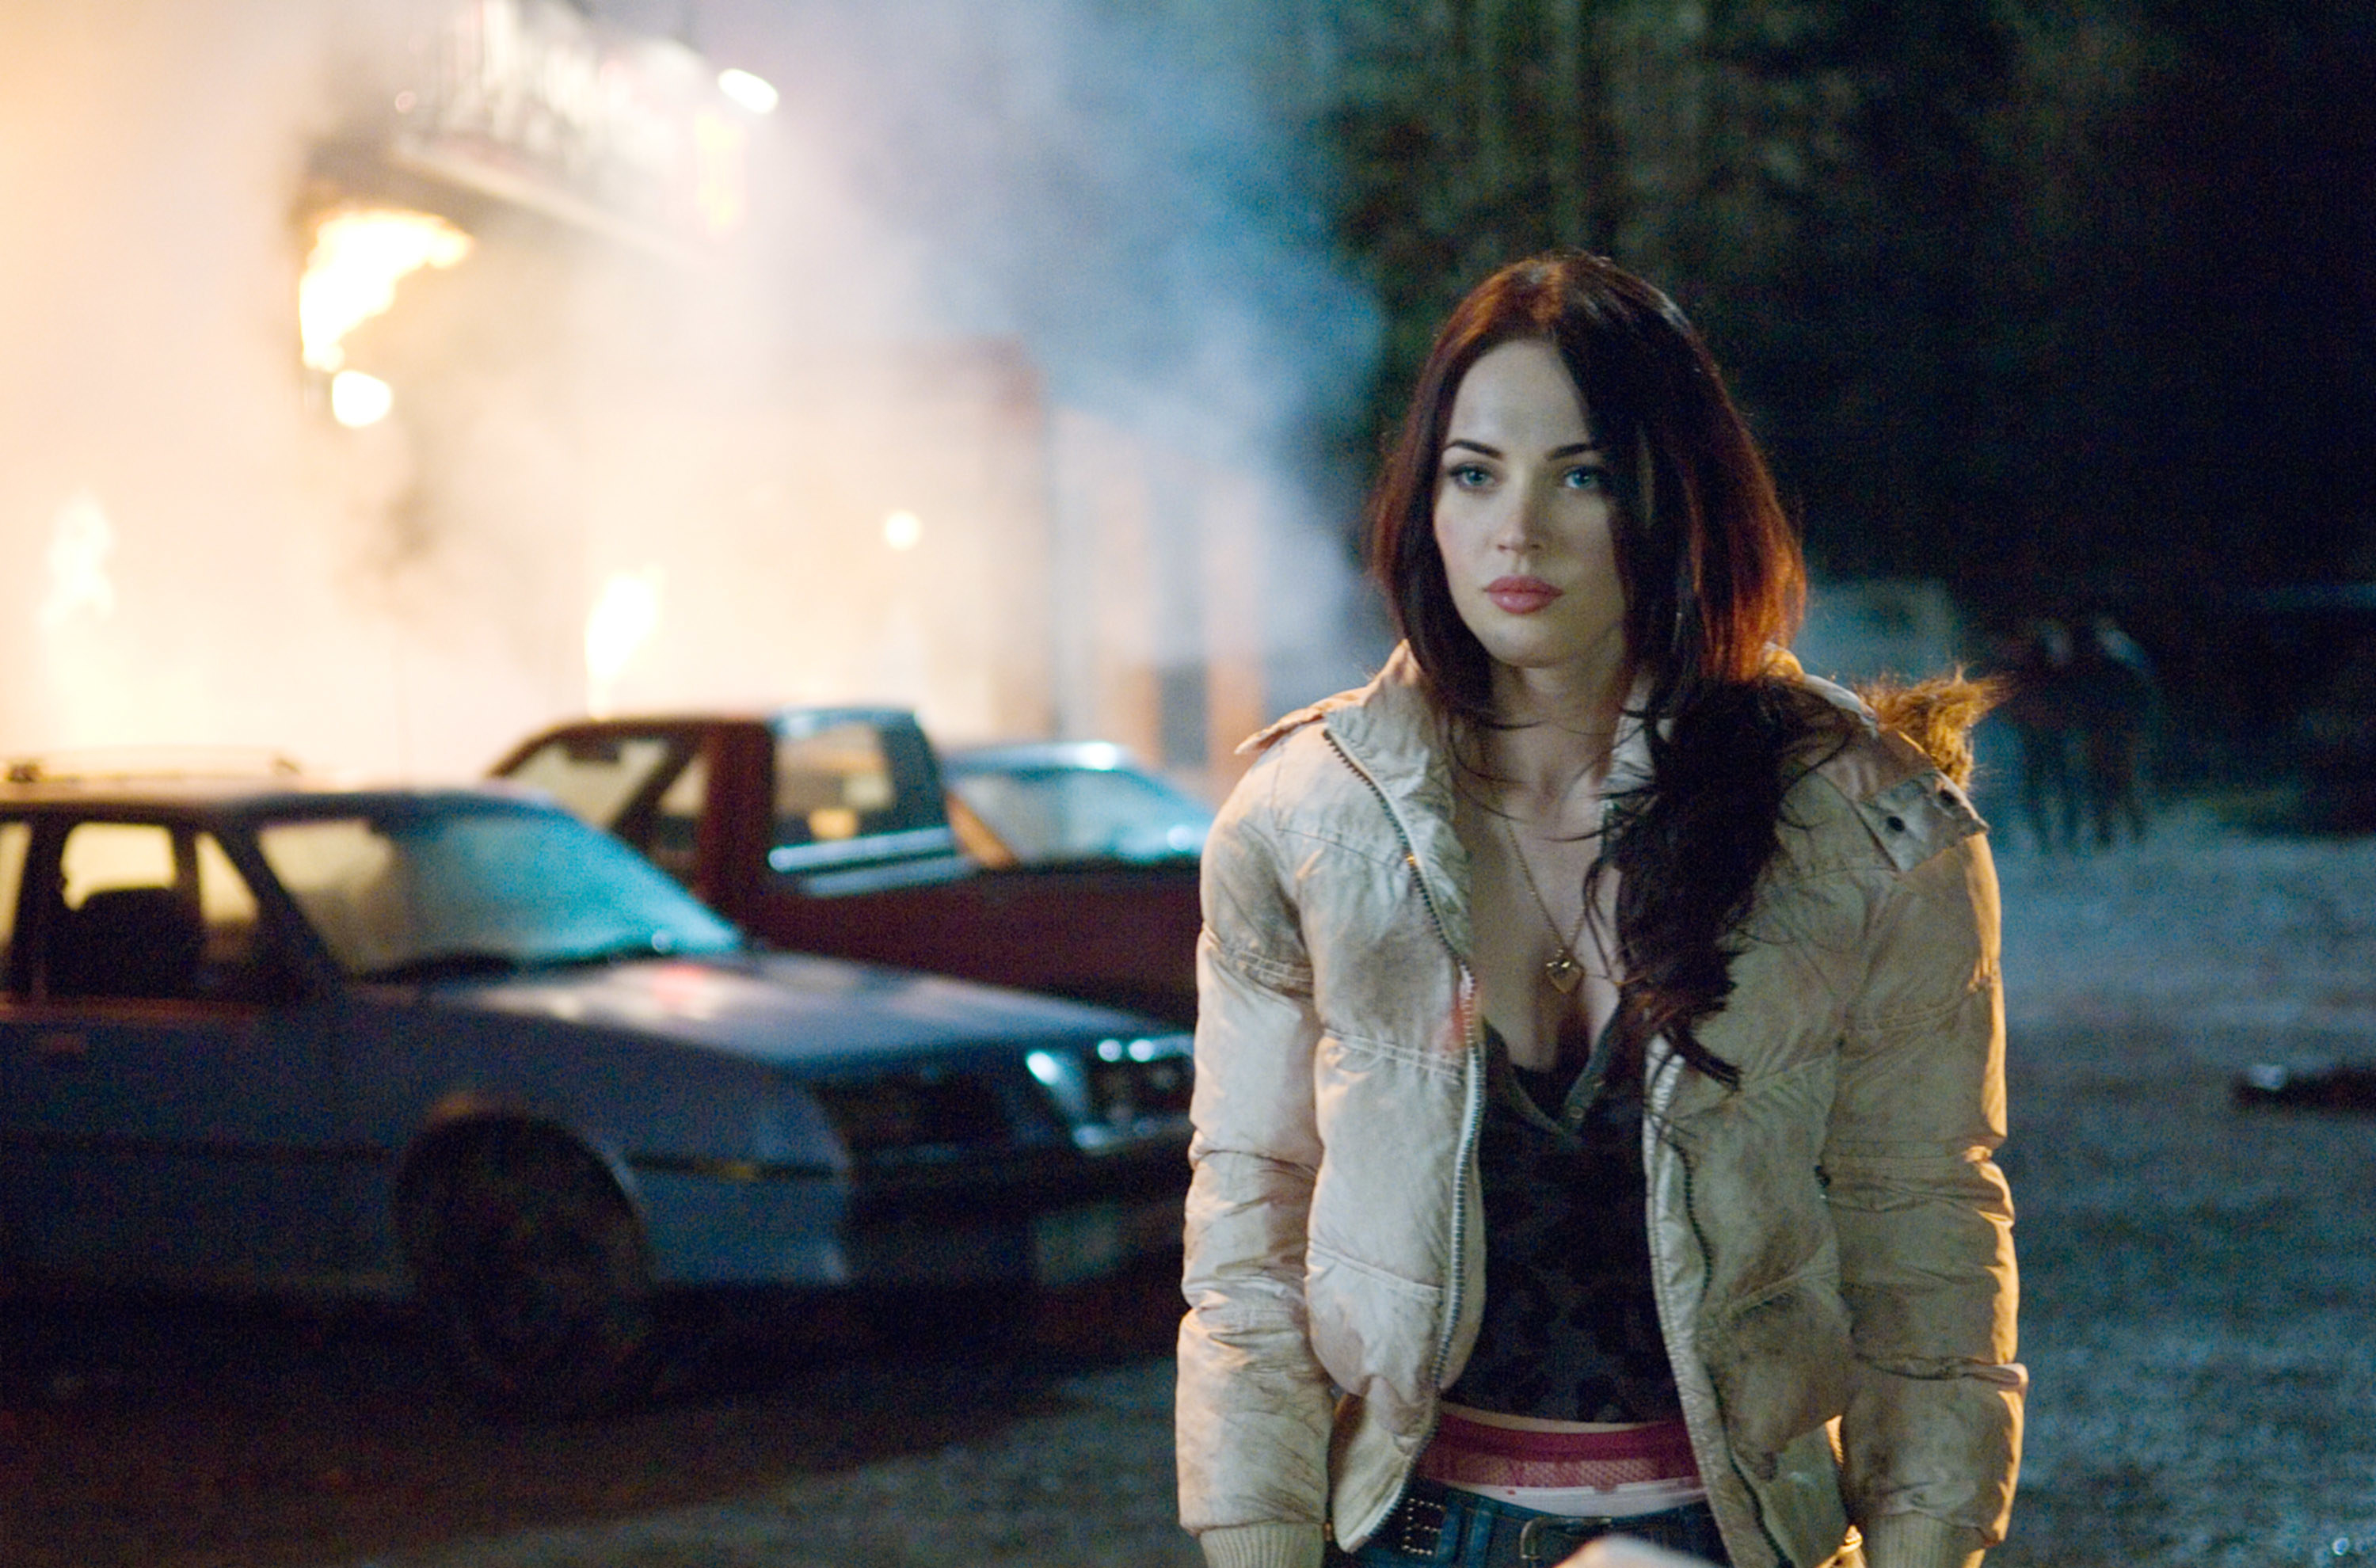 Megan Fox as Jennifer standing outside a burning building